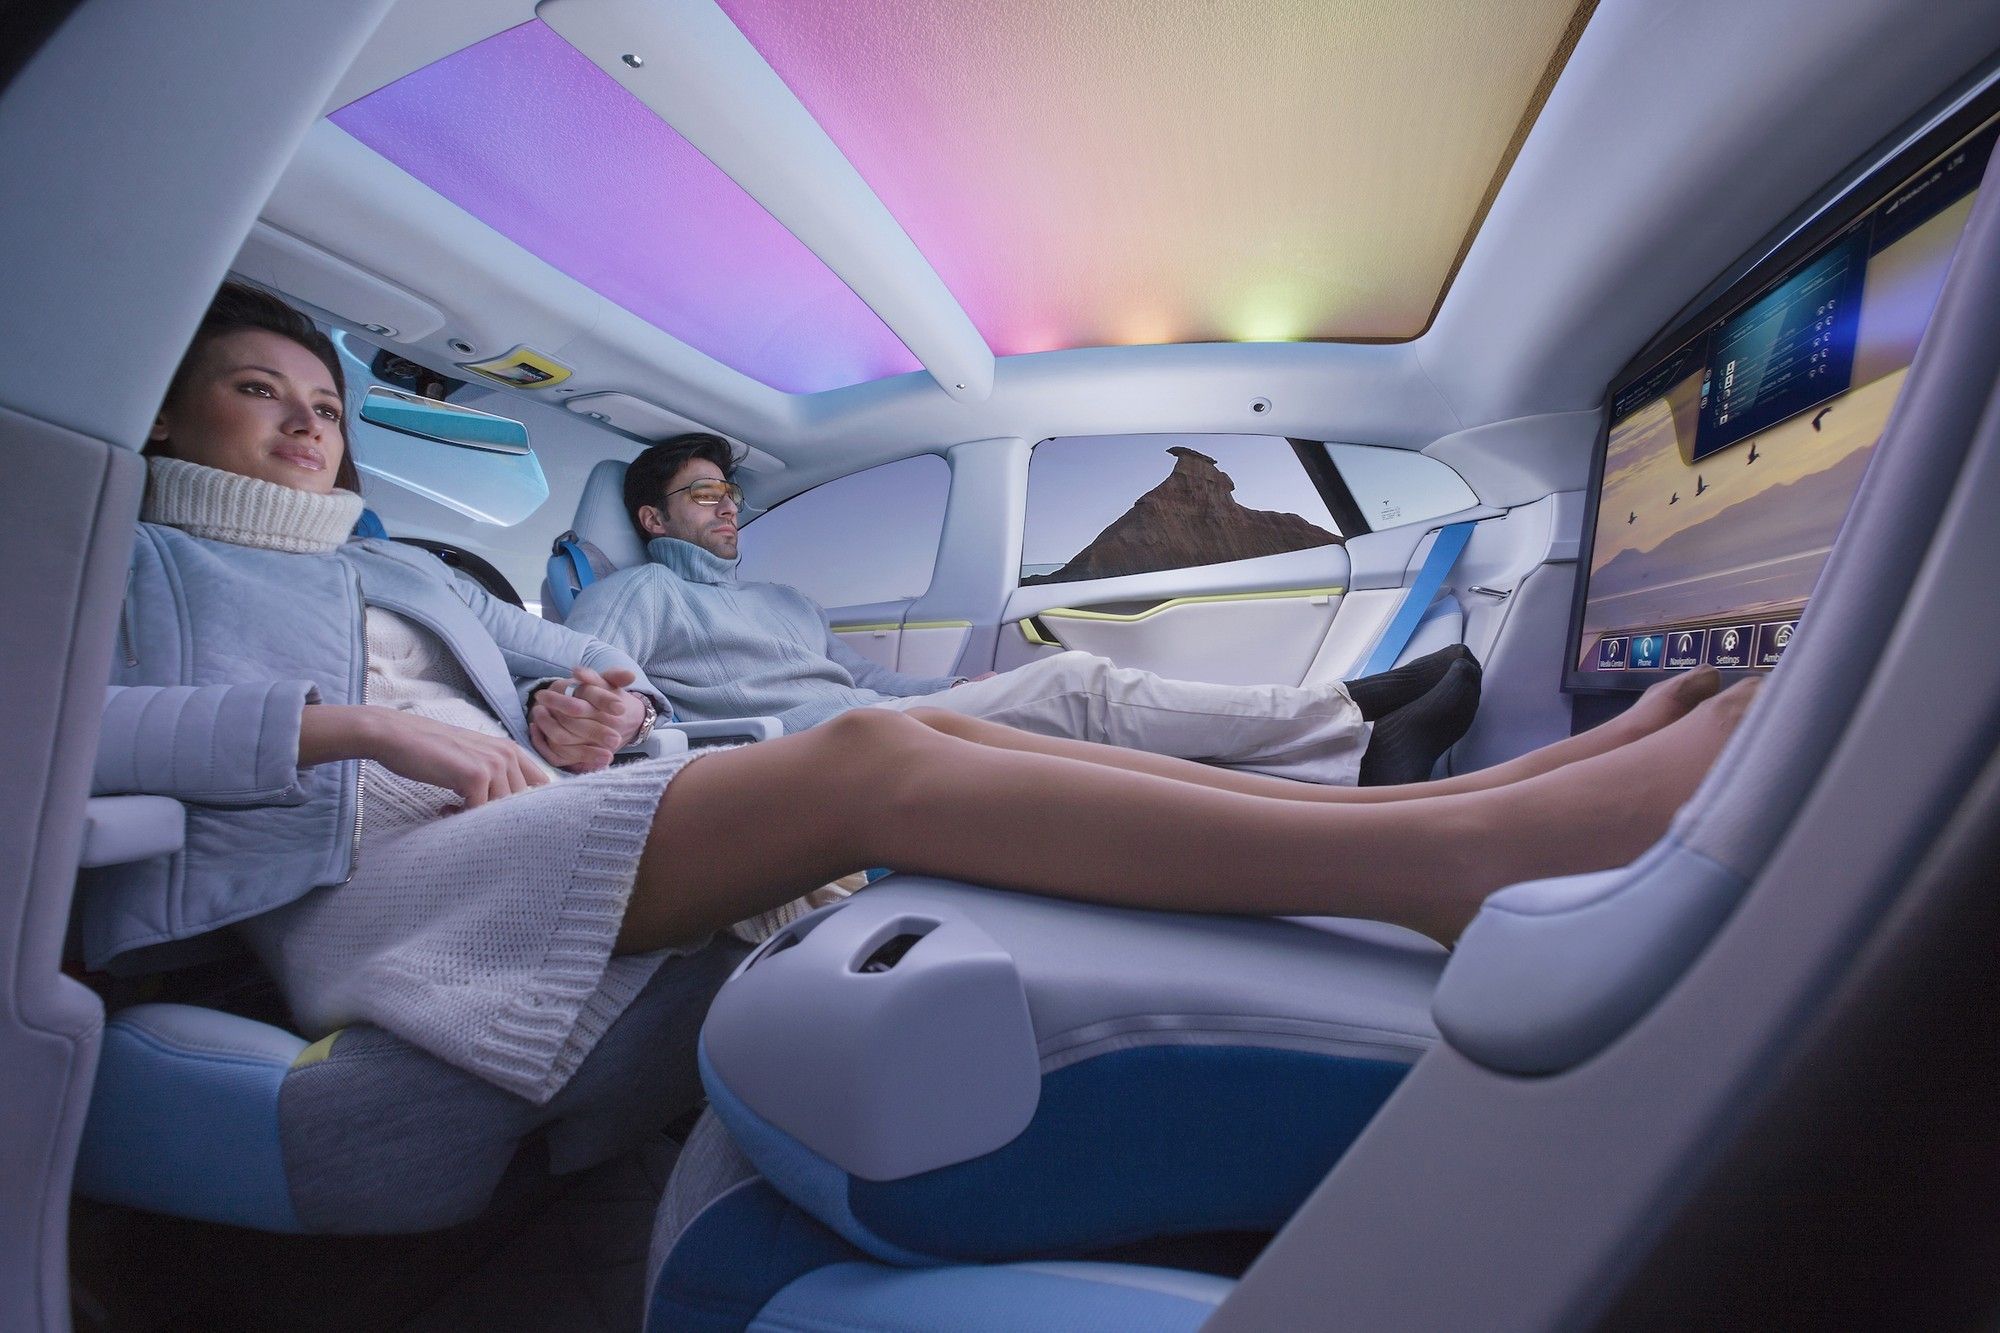 self-driving car imagined